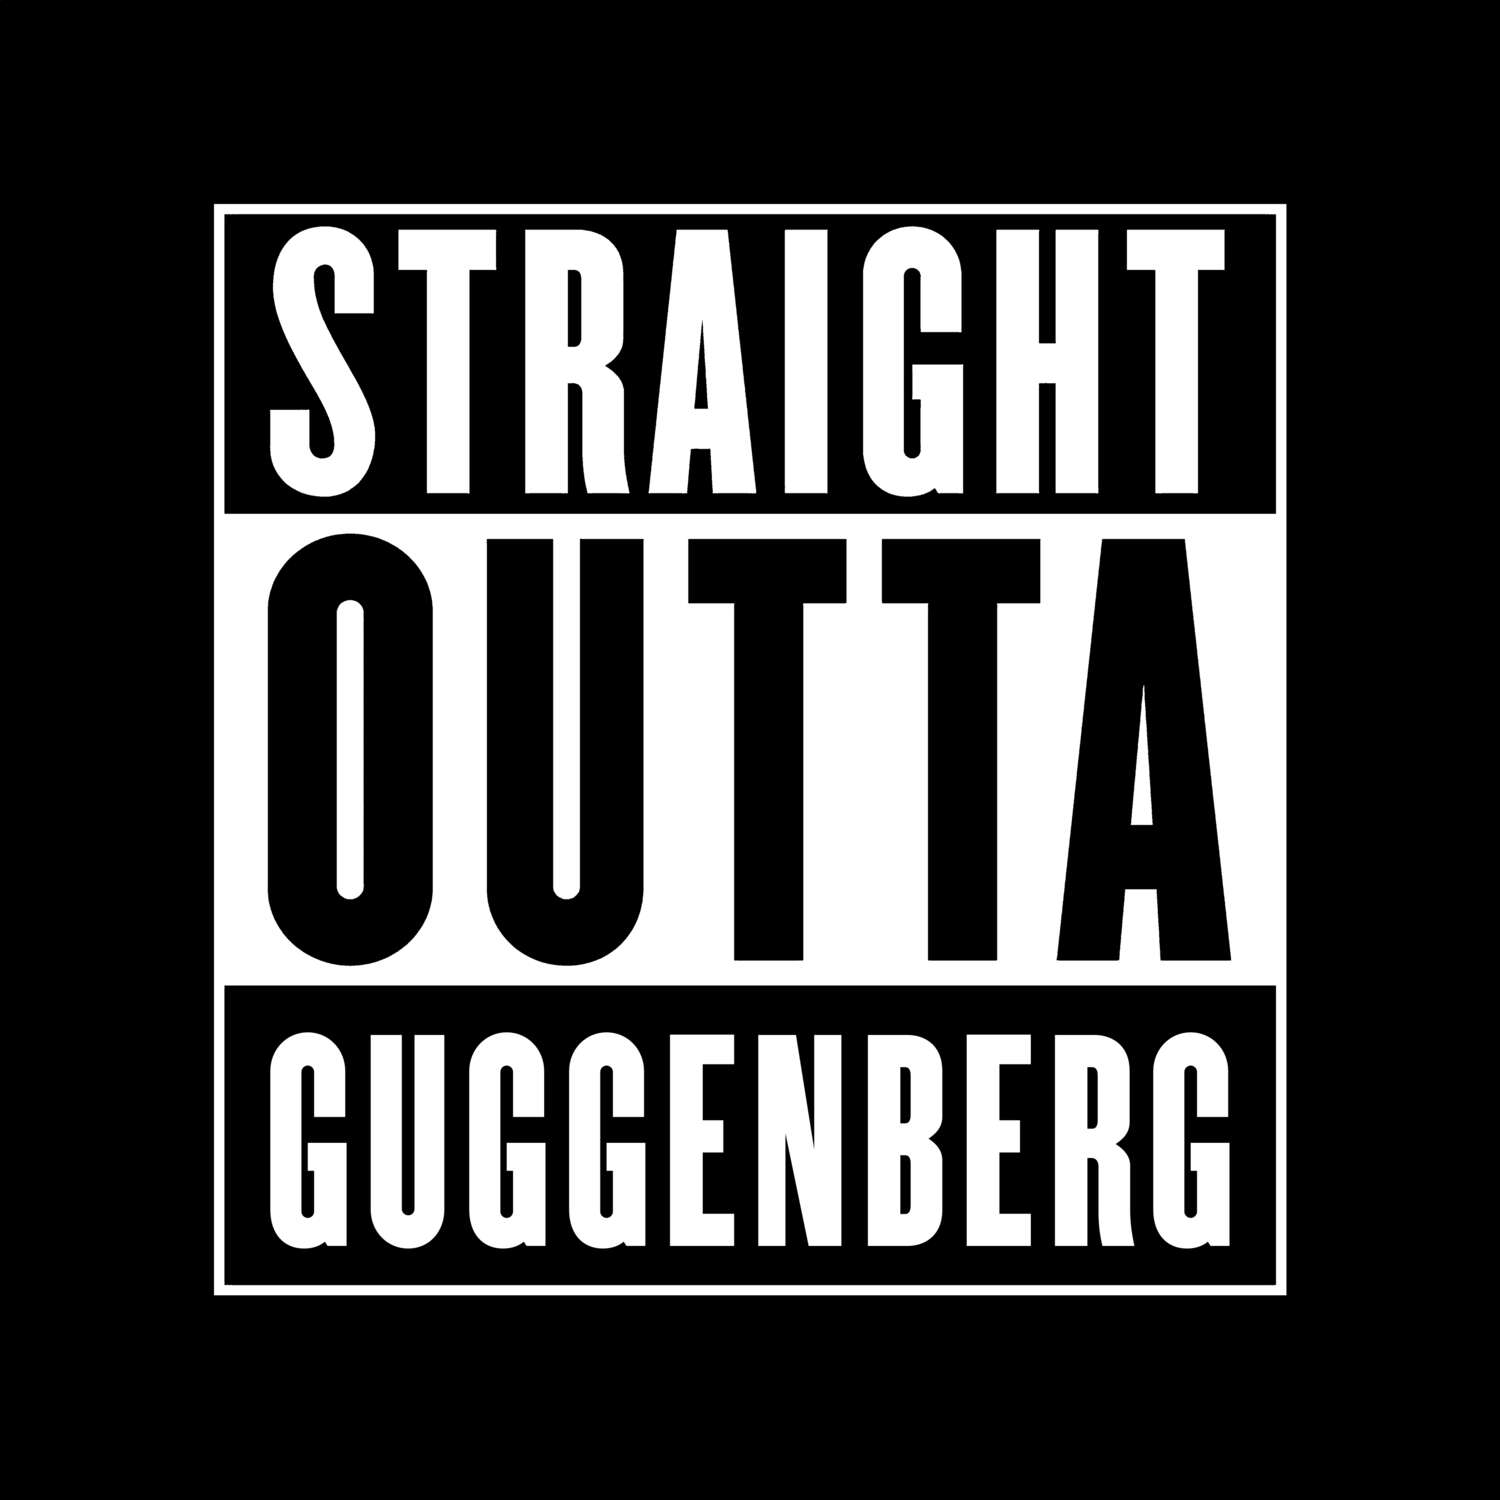 Guggenberg T-Shirt »Straight Outta«